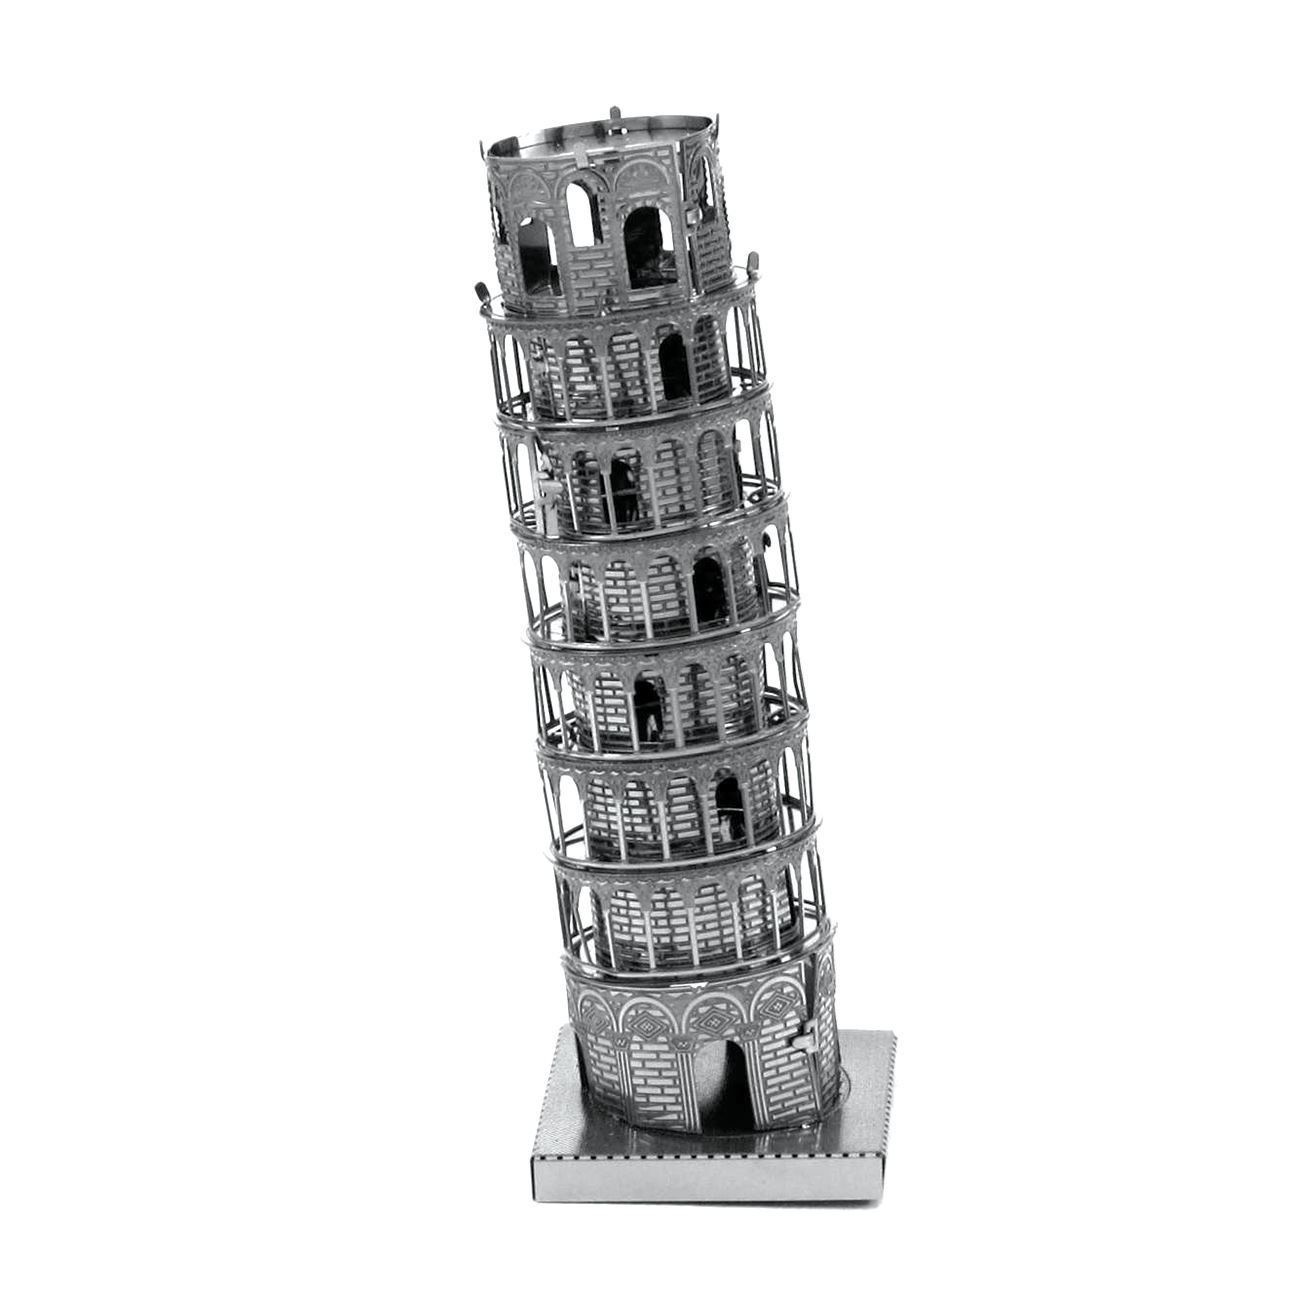 Metal Earth Metal Earth - Tower of Pisa